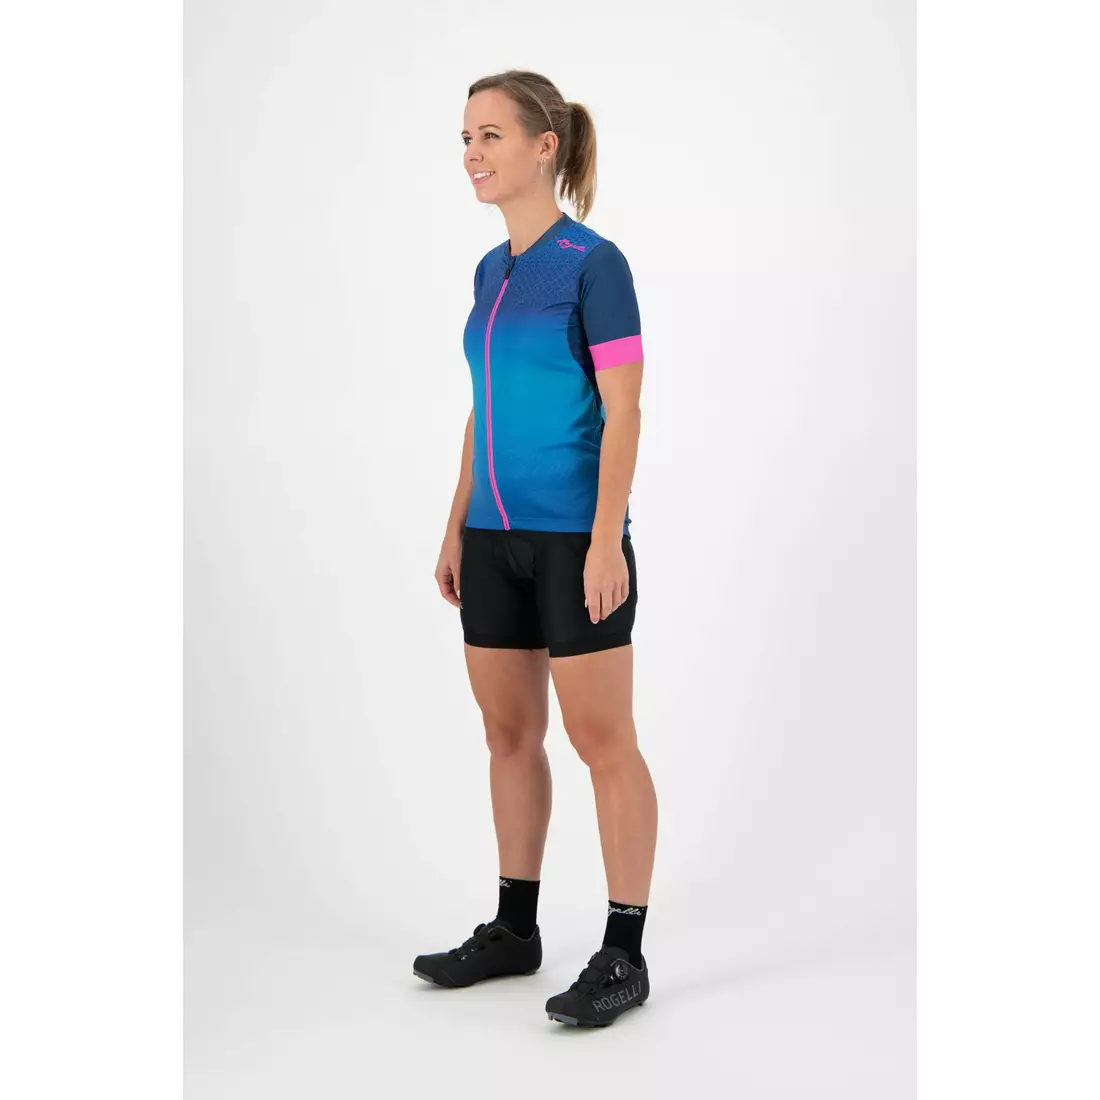 ROGELLI tricou de ciclism feminin LUX blue 010.189